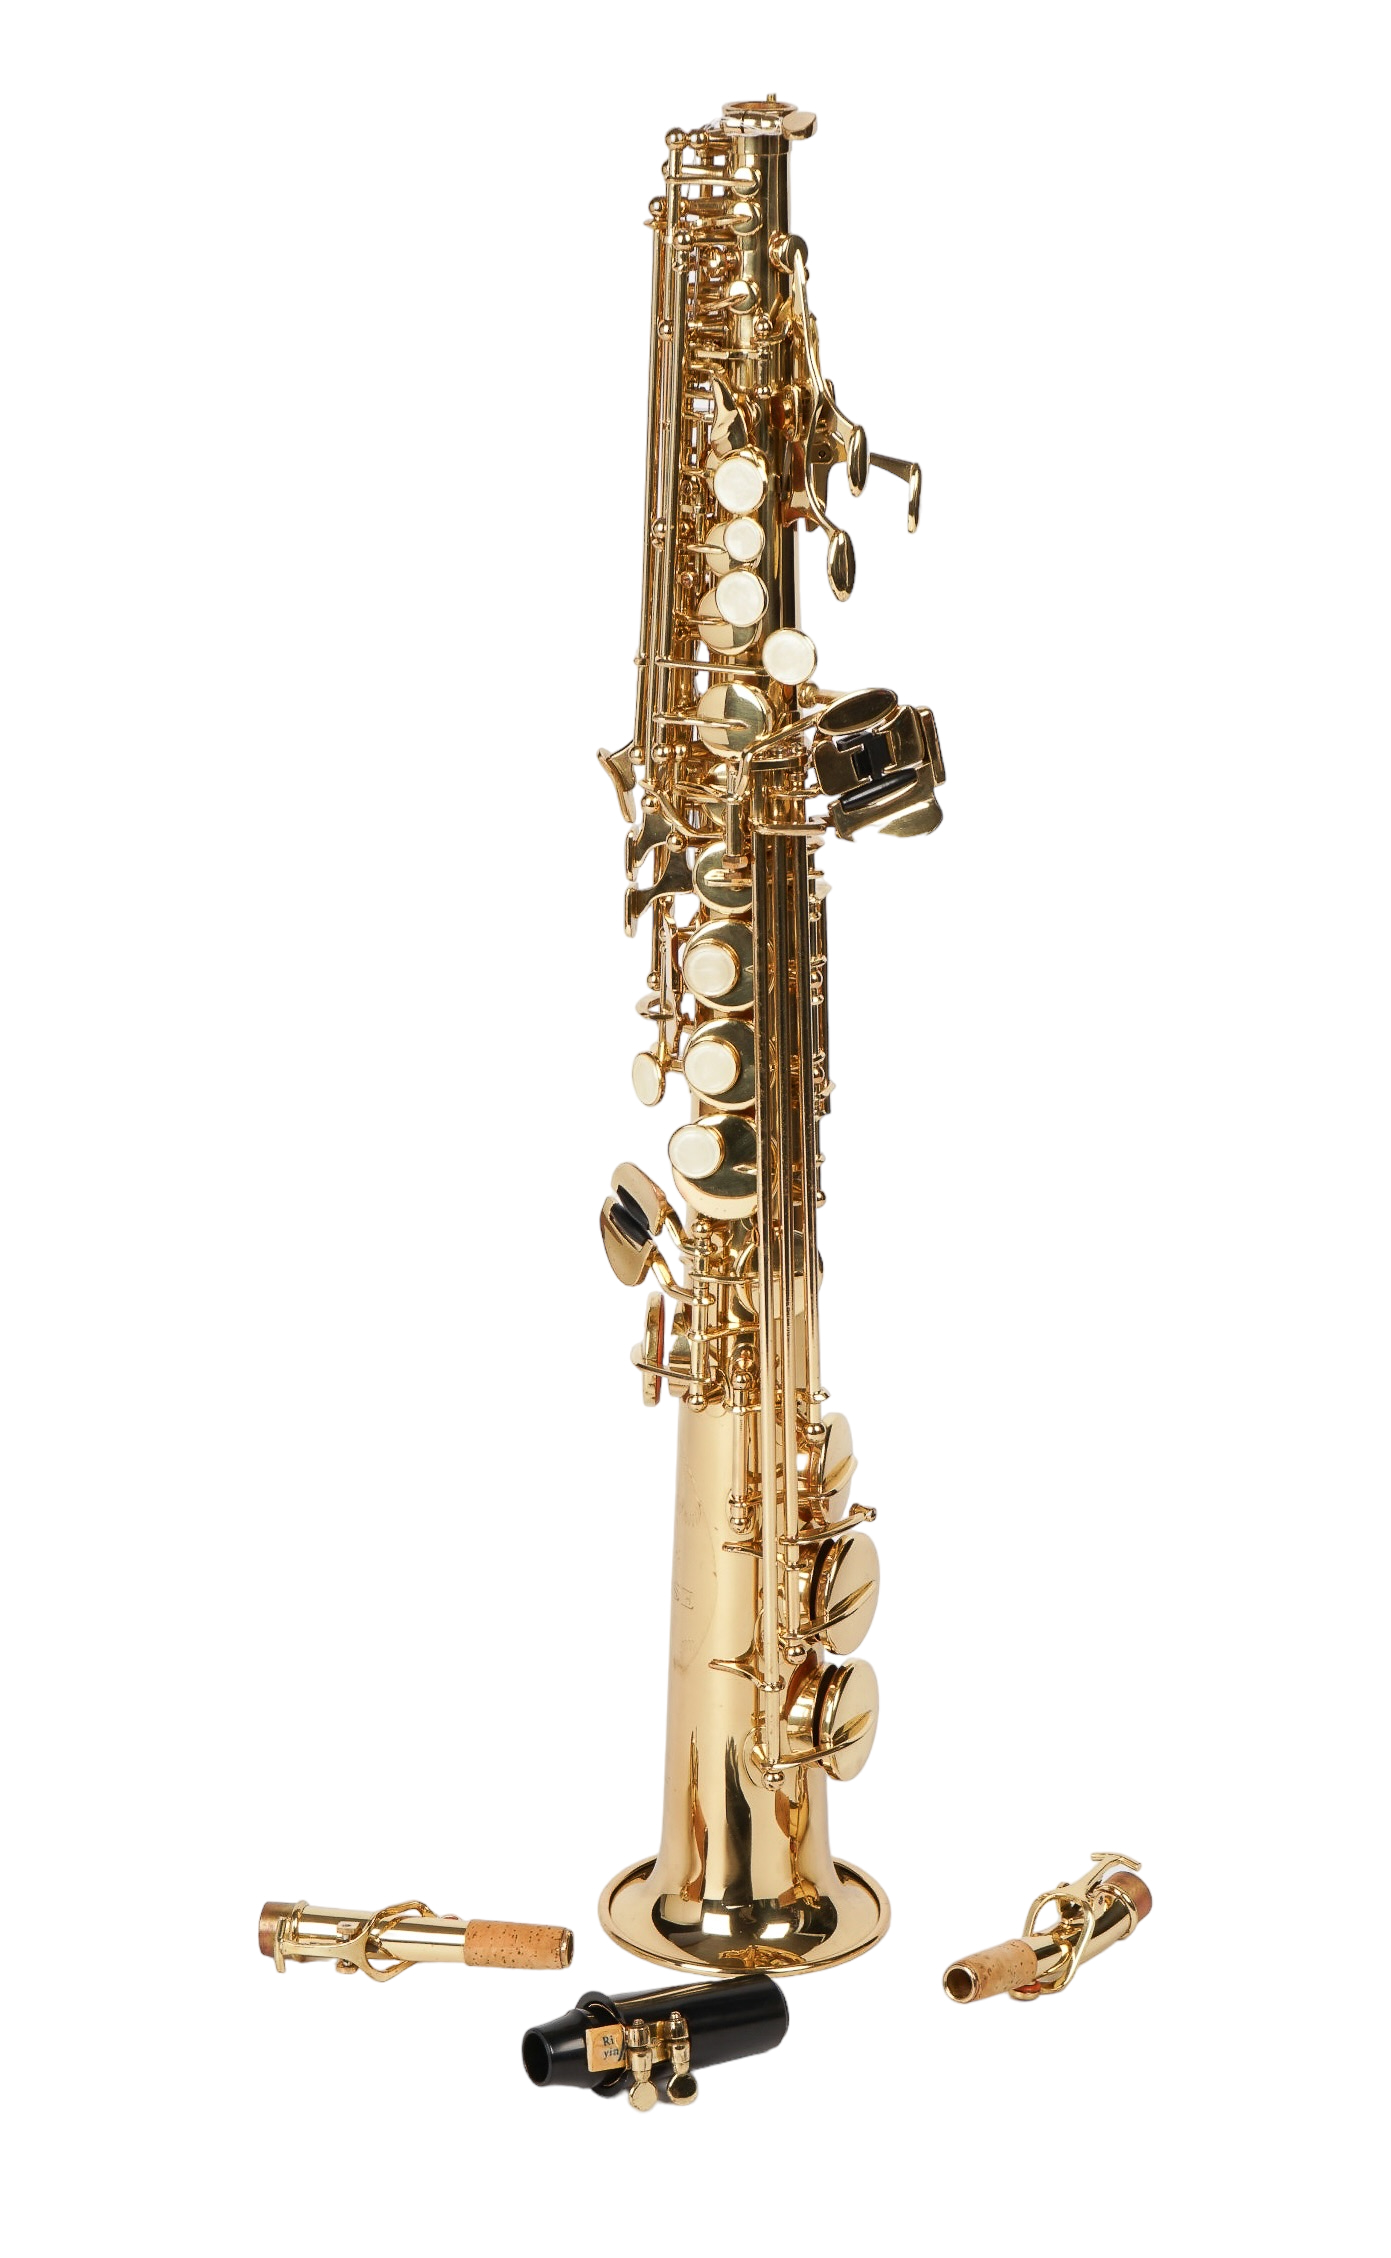 Sunrise soprano saxophone with 2e22a0